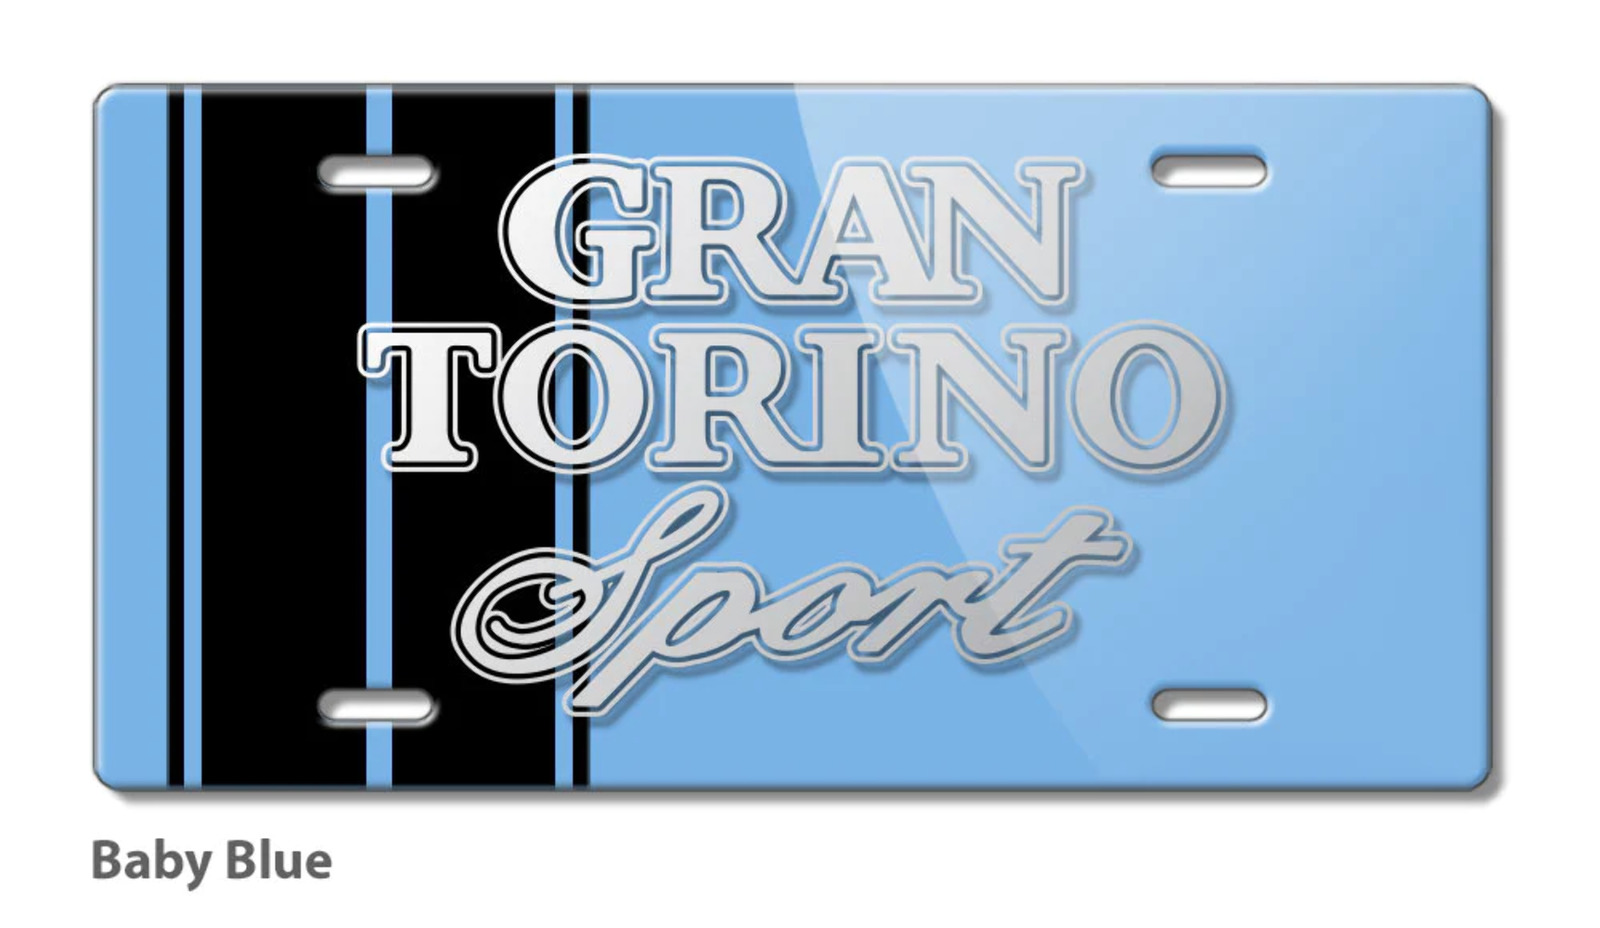 Ford Gran Torino Sport 1972 - 1975 Emblem License Plate - 16 colors - Made USA